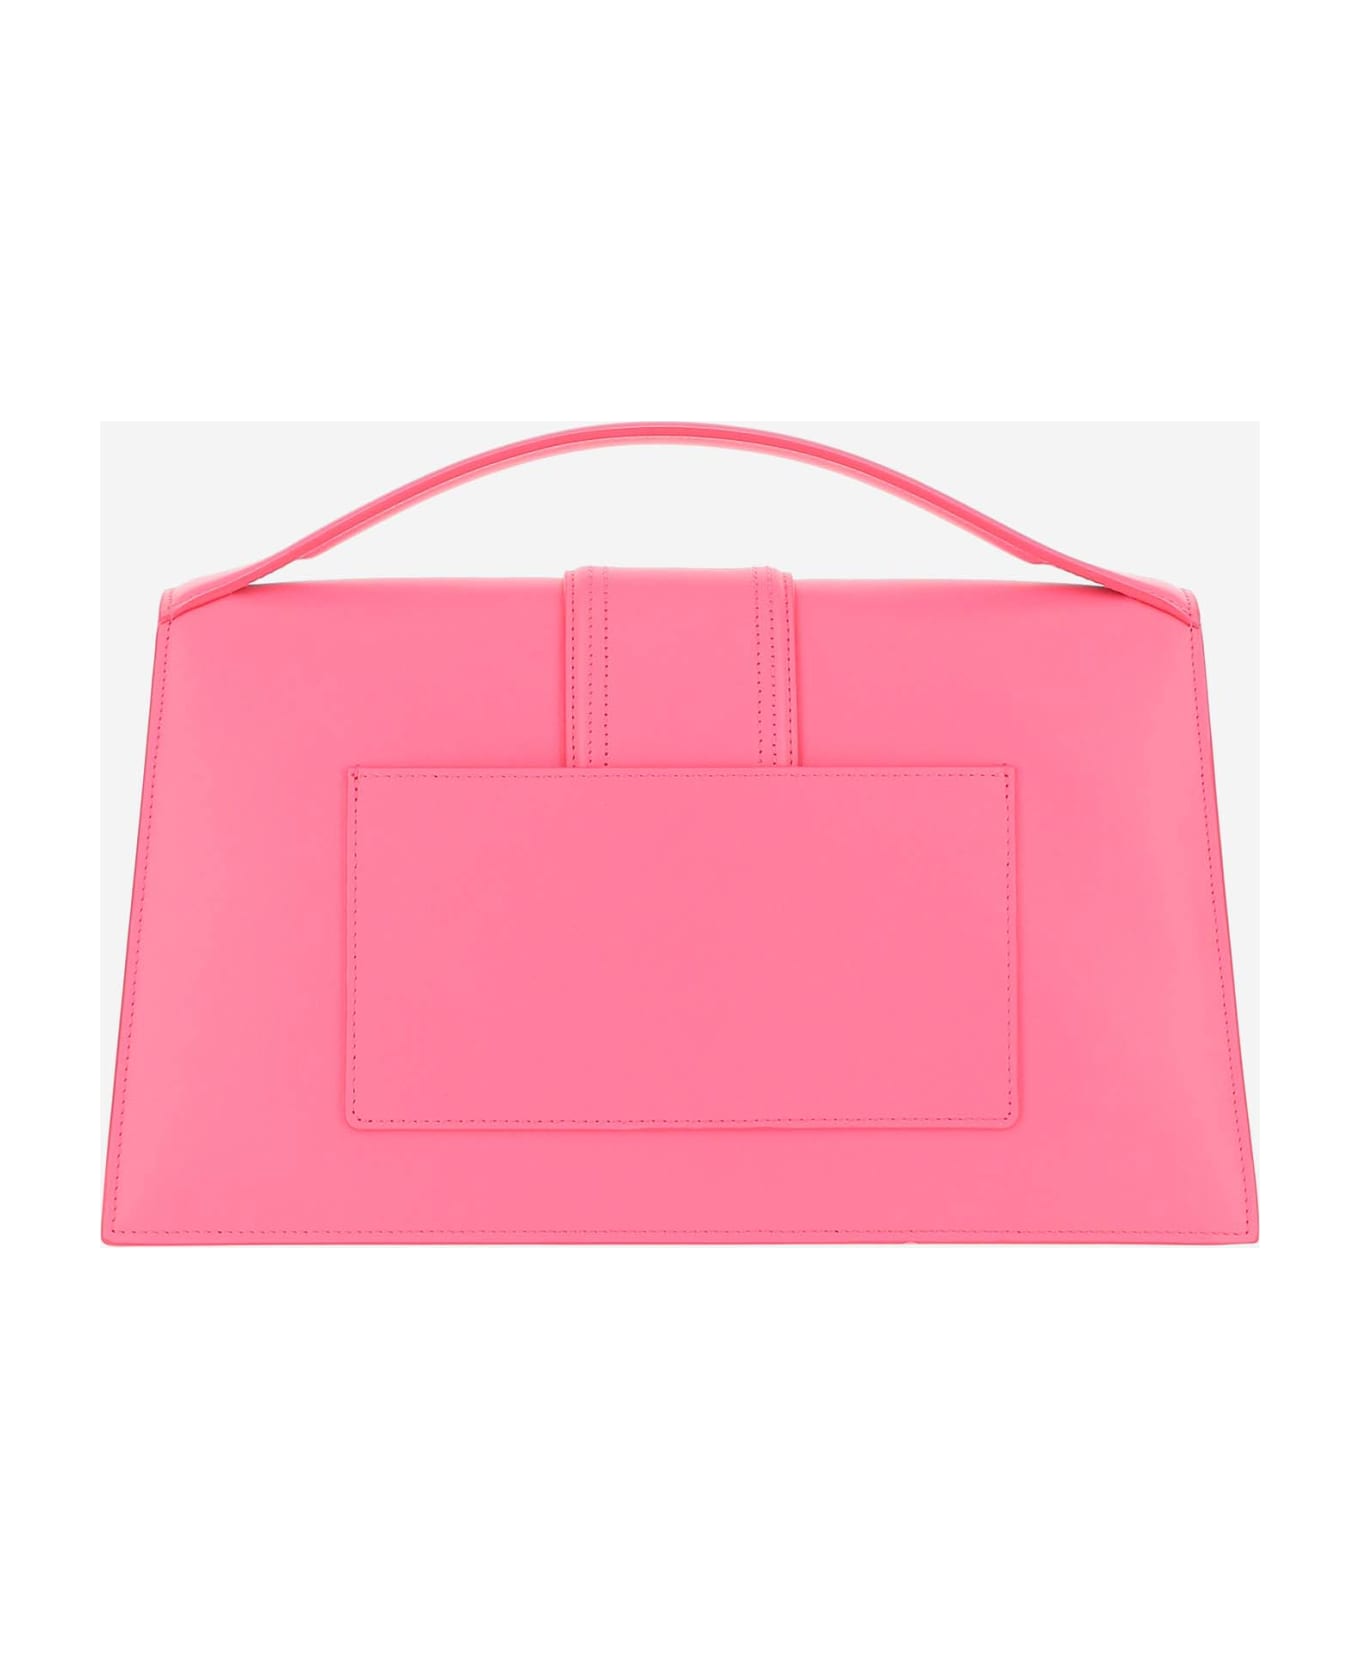 Jacquemus 'le Bambinou' Shoulder Bag - Pink